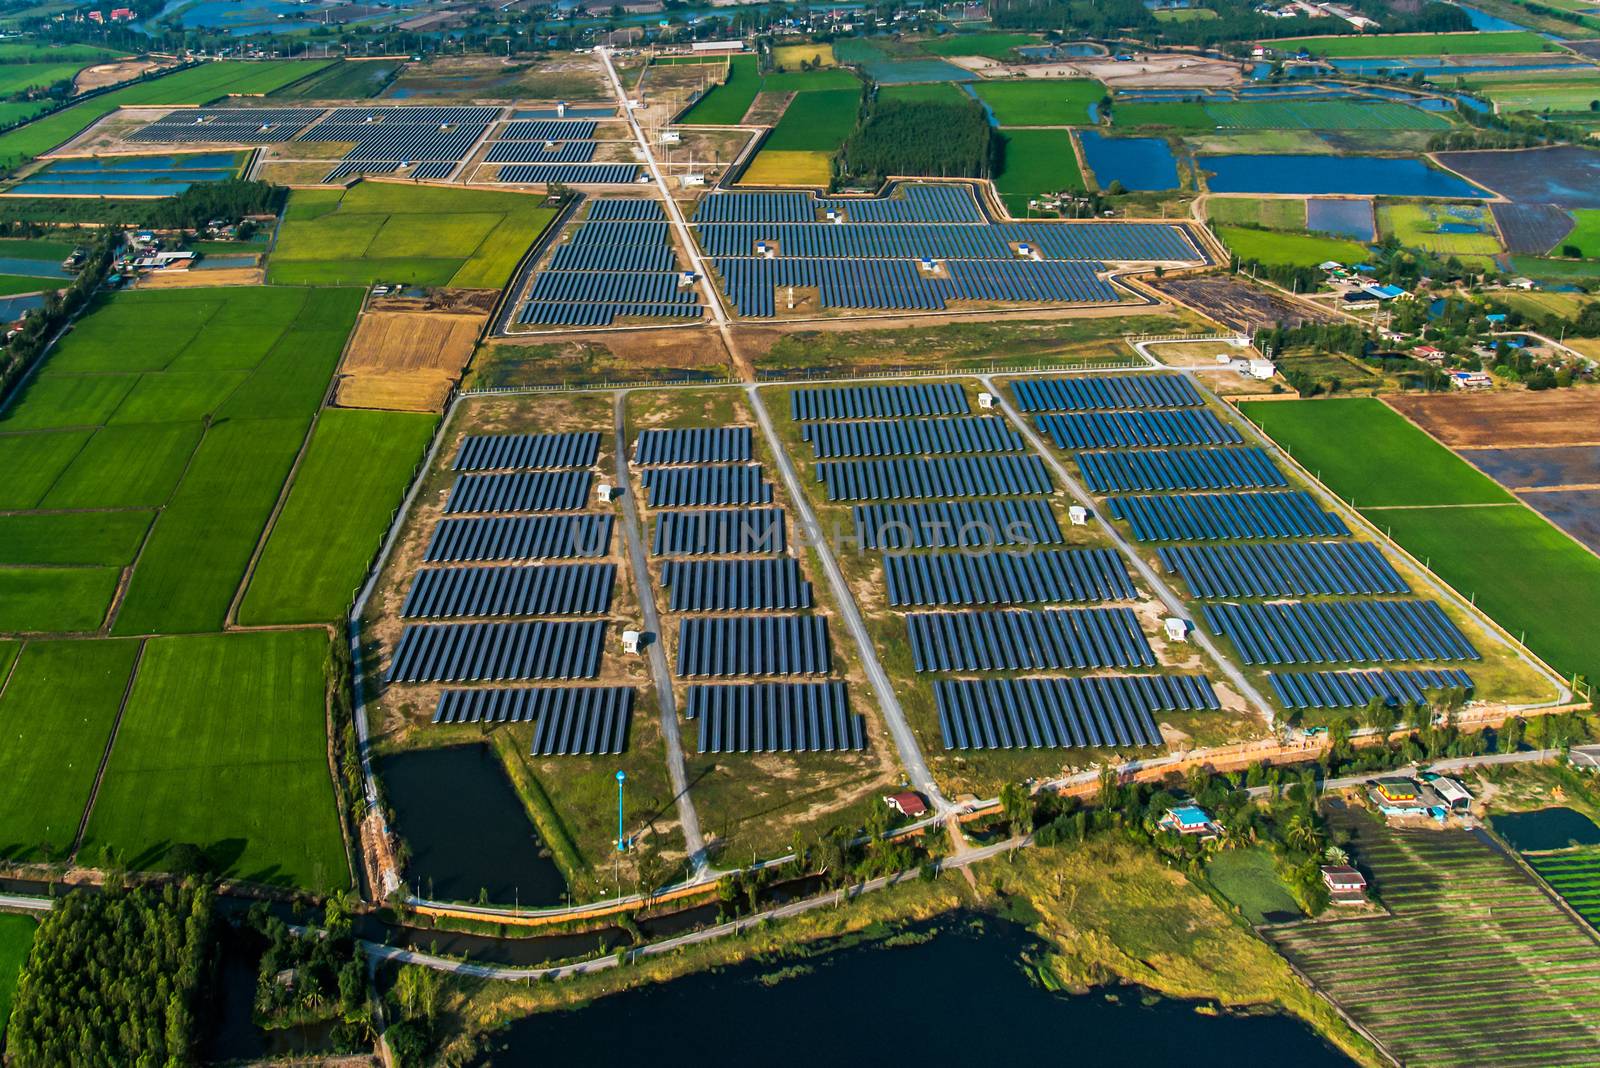 Solar farm, solar panels in Thailand from the air